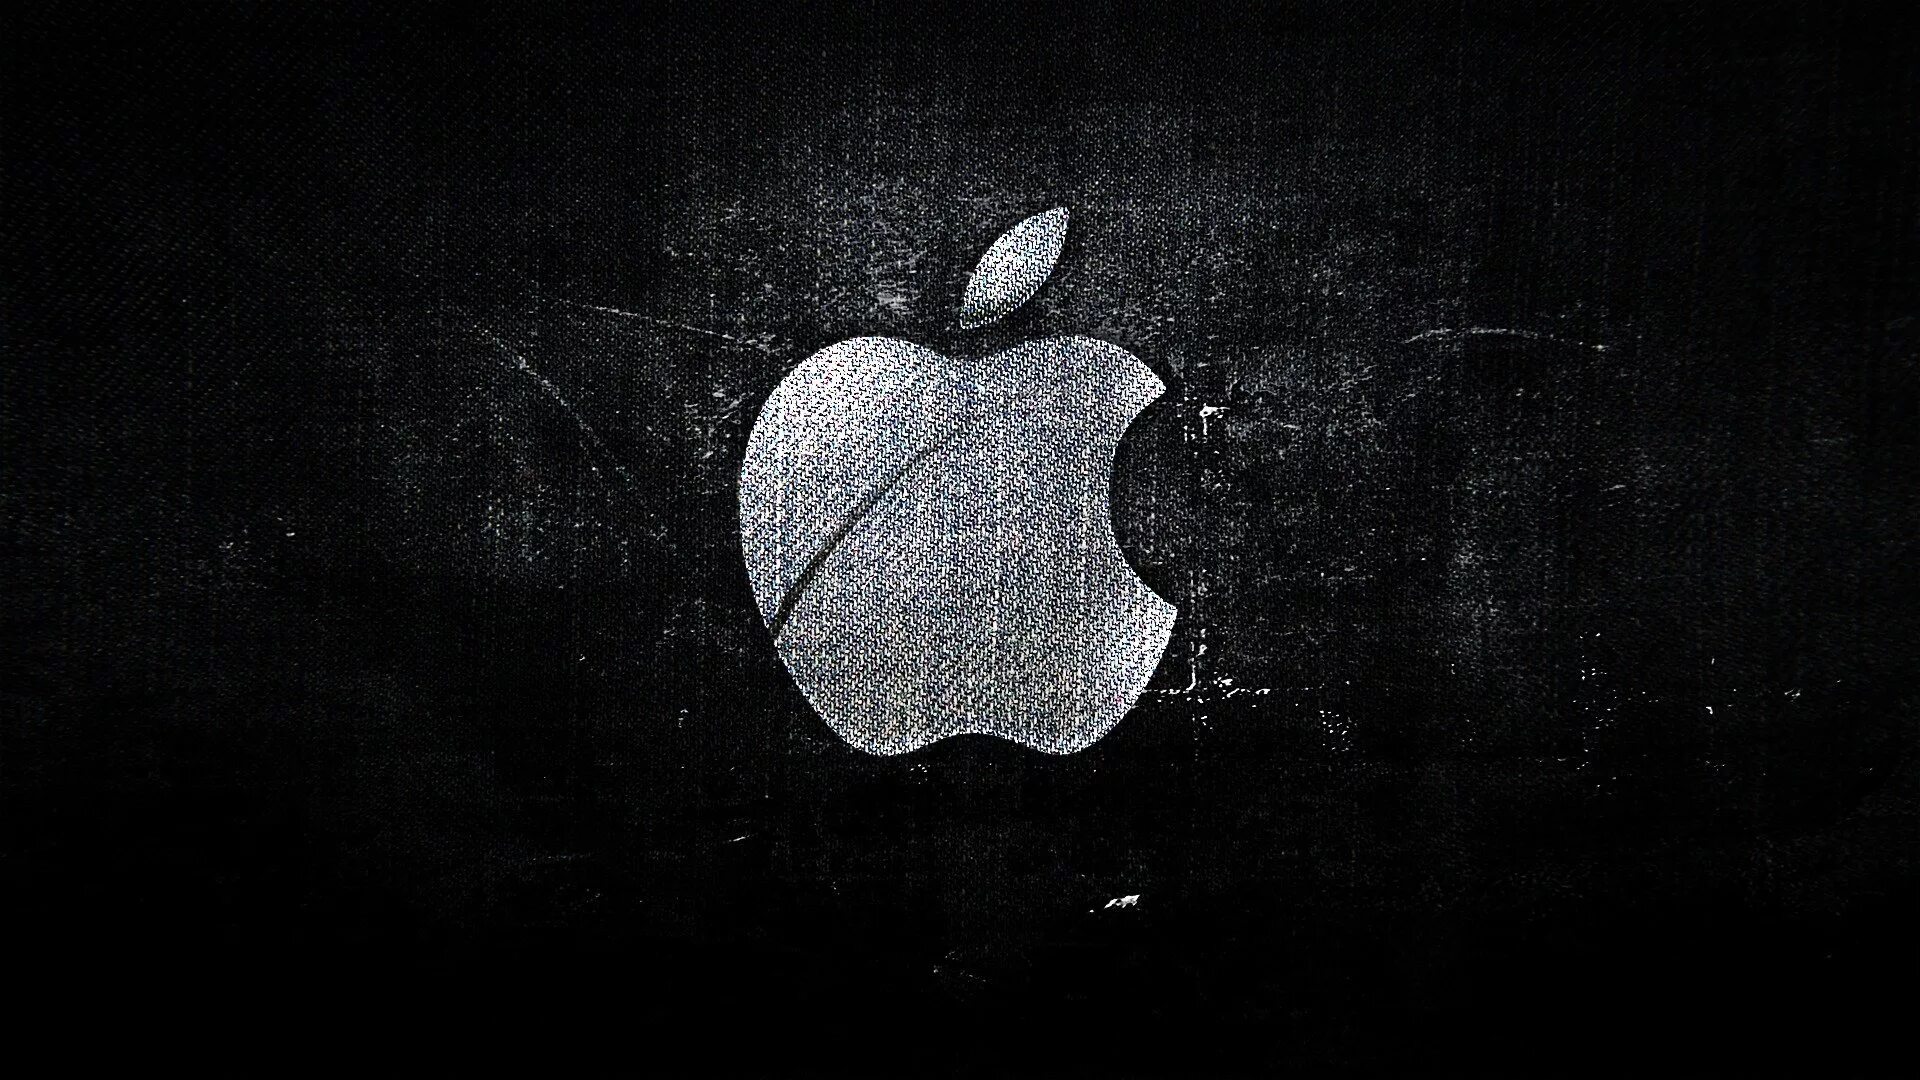 Обои на айфон яблоко. Apple 4r. Айфон значок Эппл. Apple logo 2022. Заставка Apple.